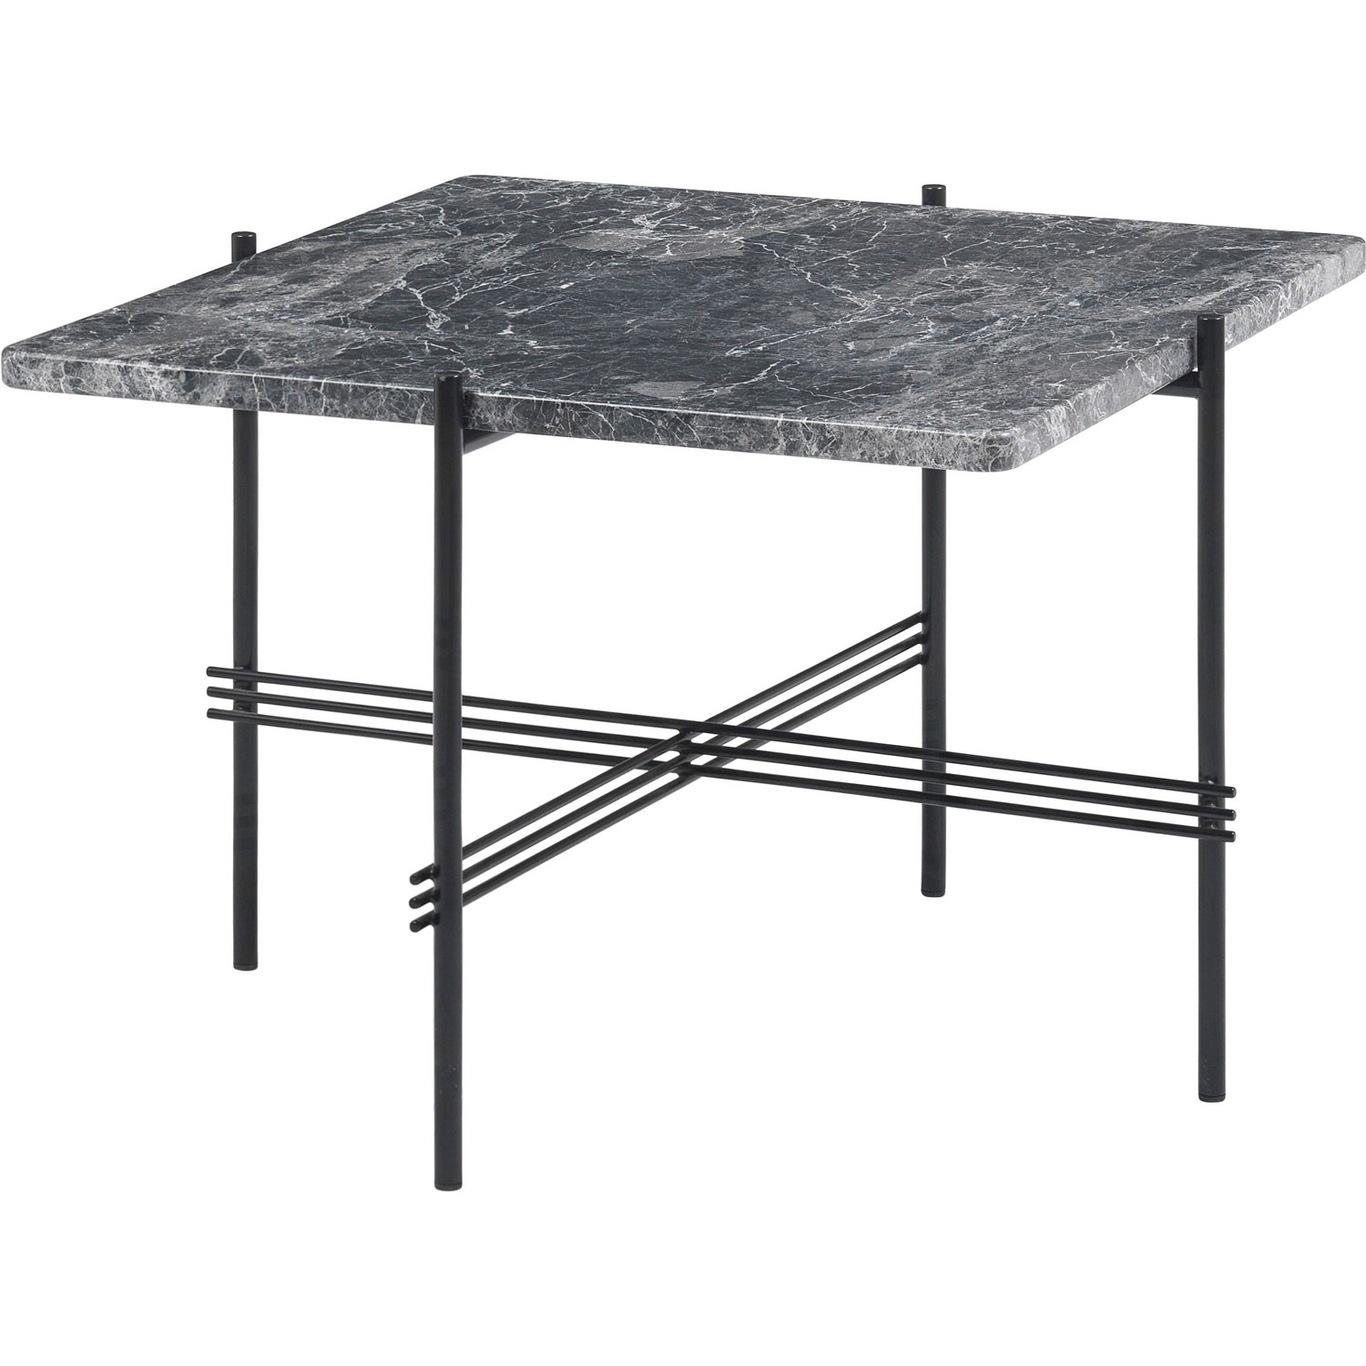 TS Coffee Table 55x55 cm, Black / Grey Marble